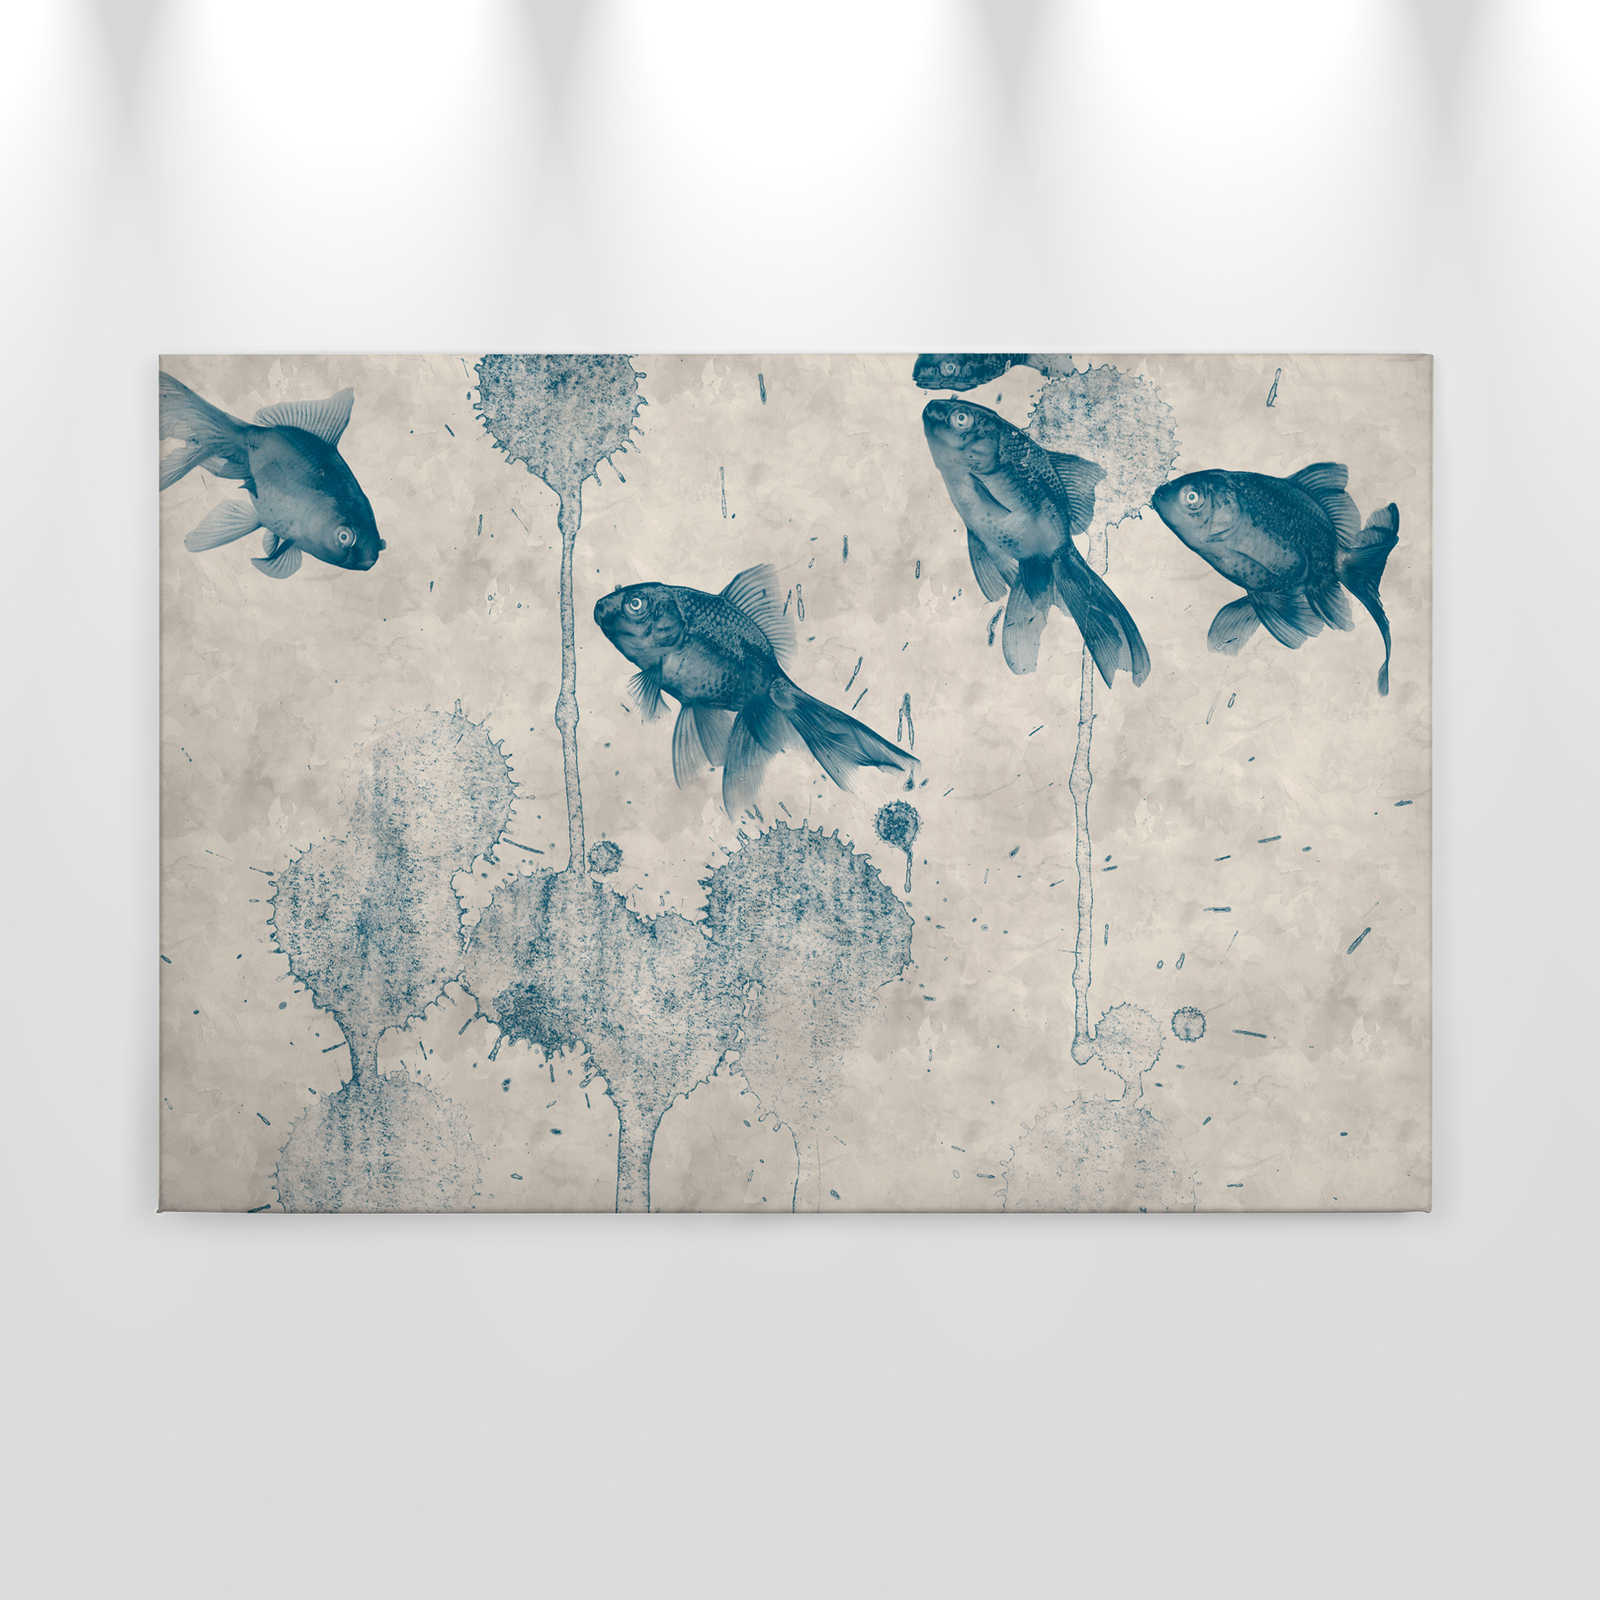             moderness Canvas painting Goldfish Pond - 0,90 m x 0,60 m
        